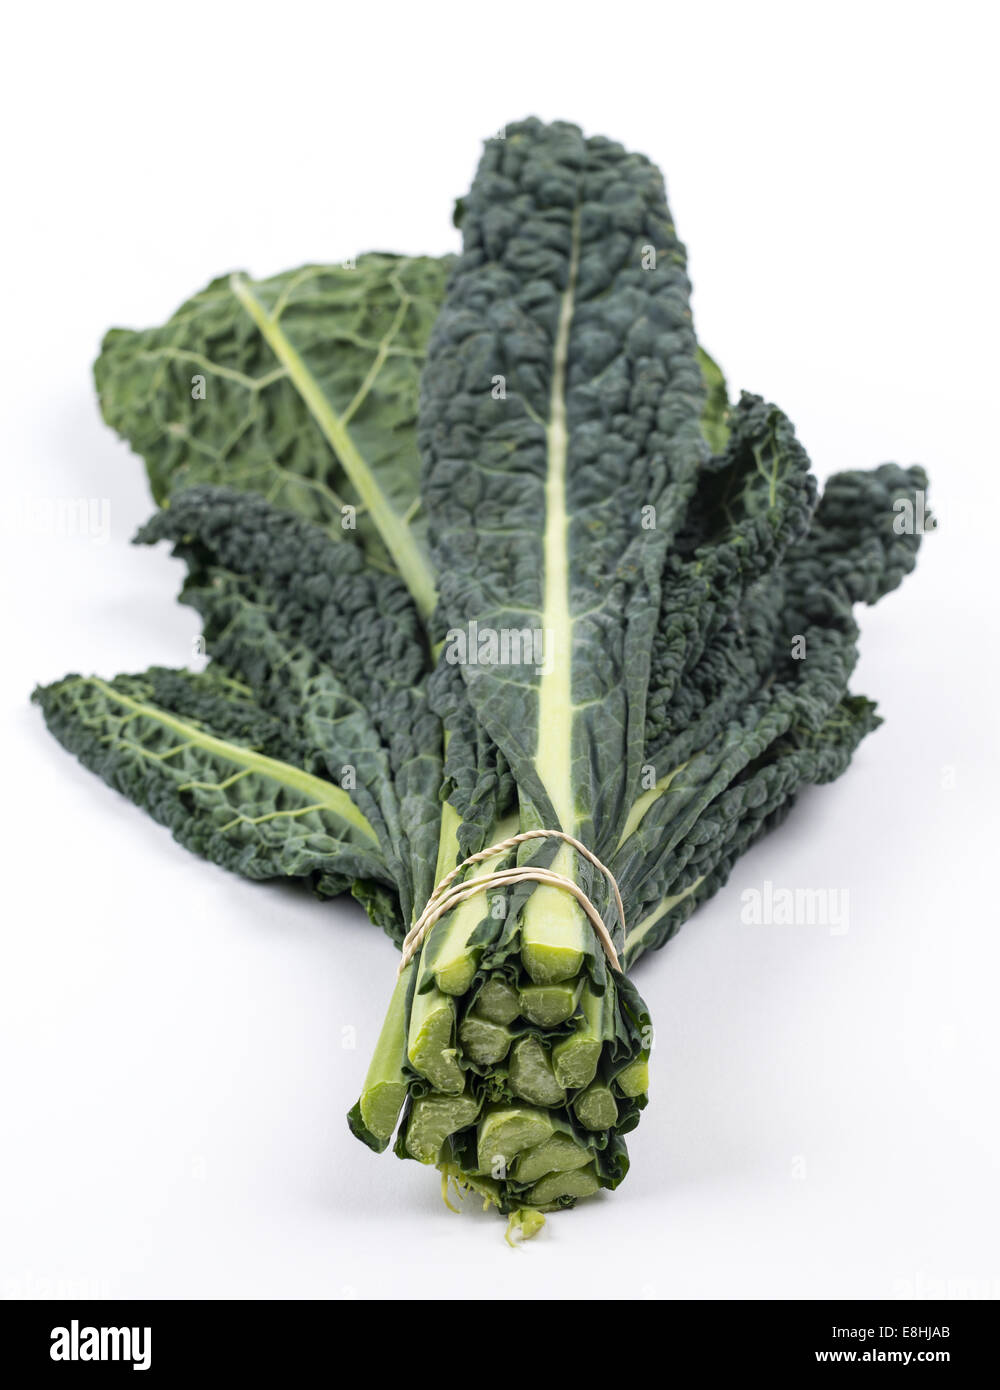 Black kale leaves on white background Stock Photo